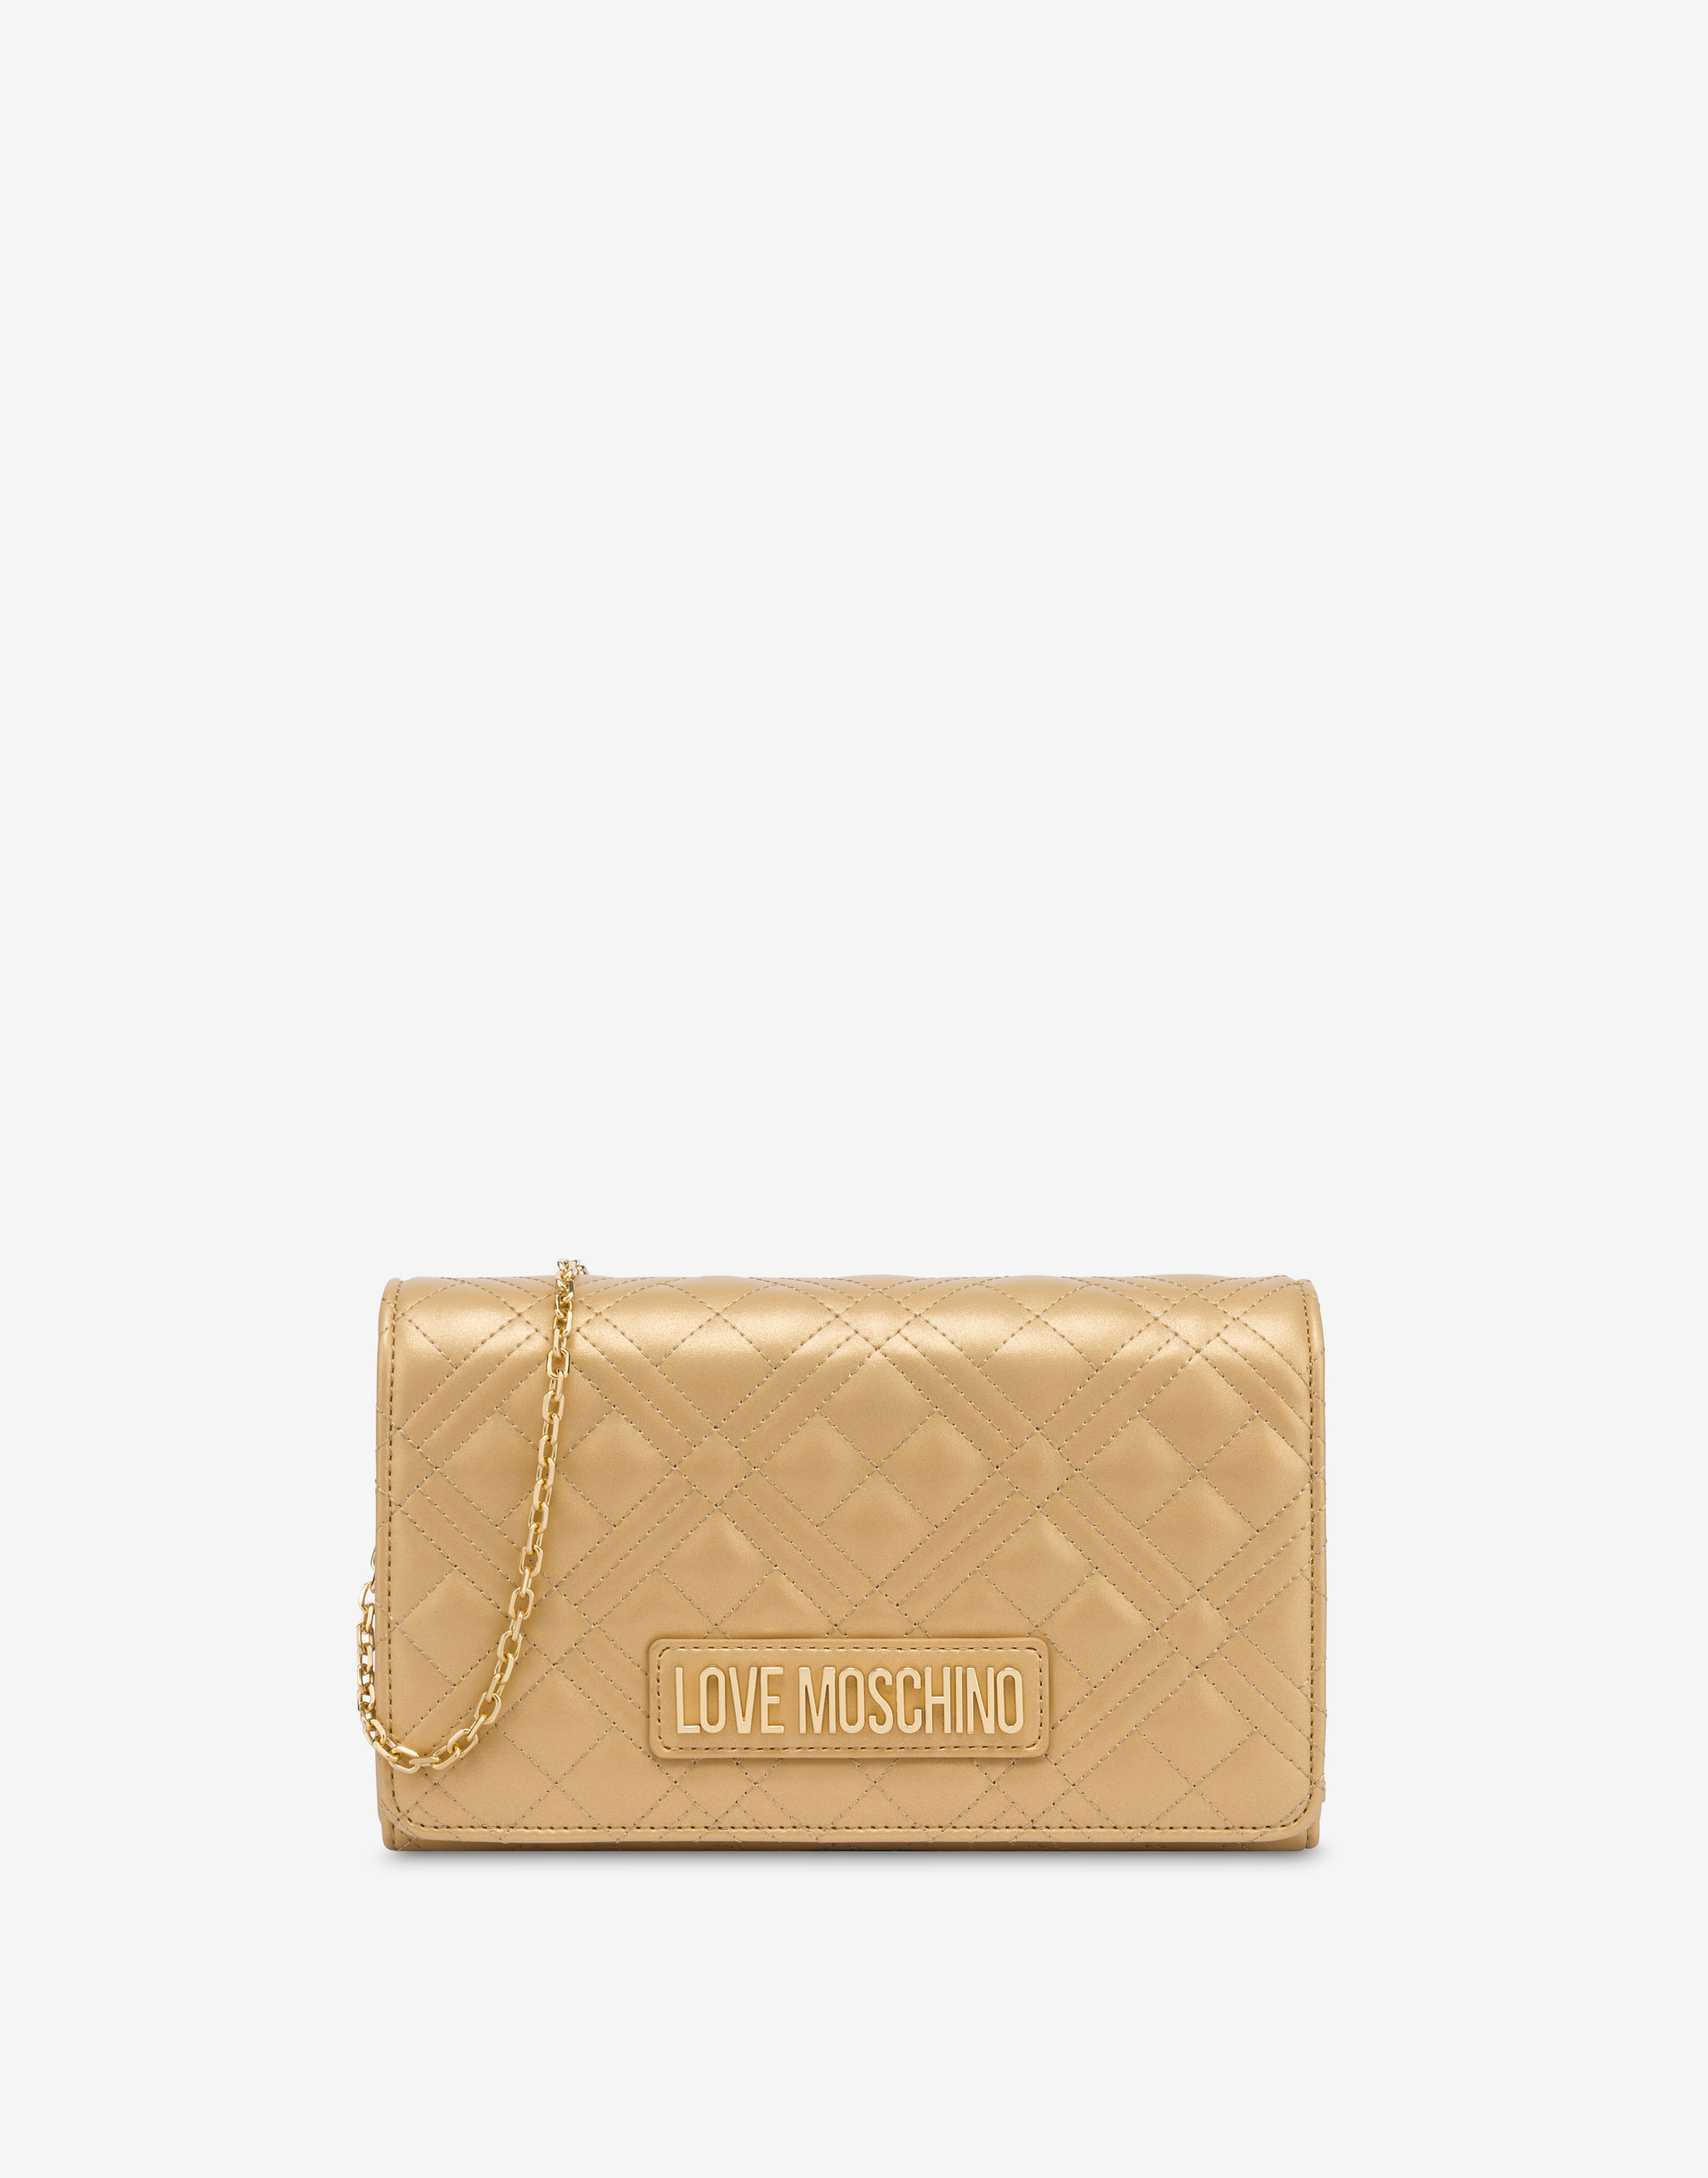 Where can I buy authentic but economical Louis Vuitton purses? - Quora